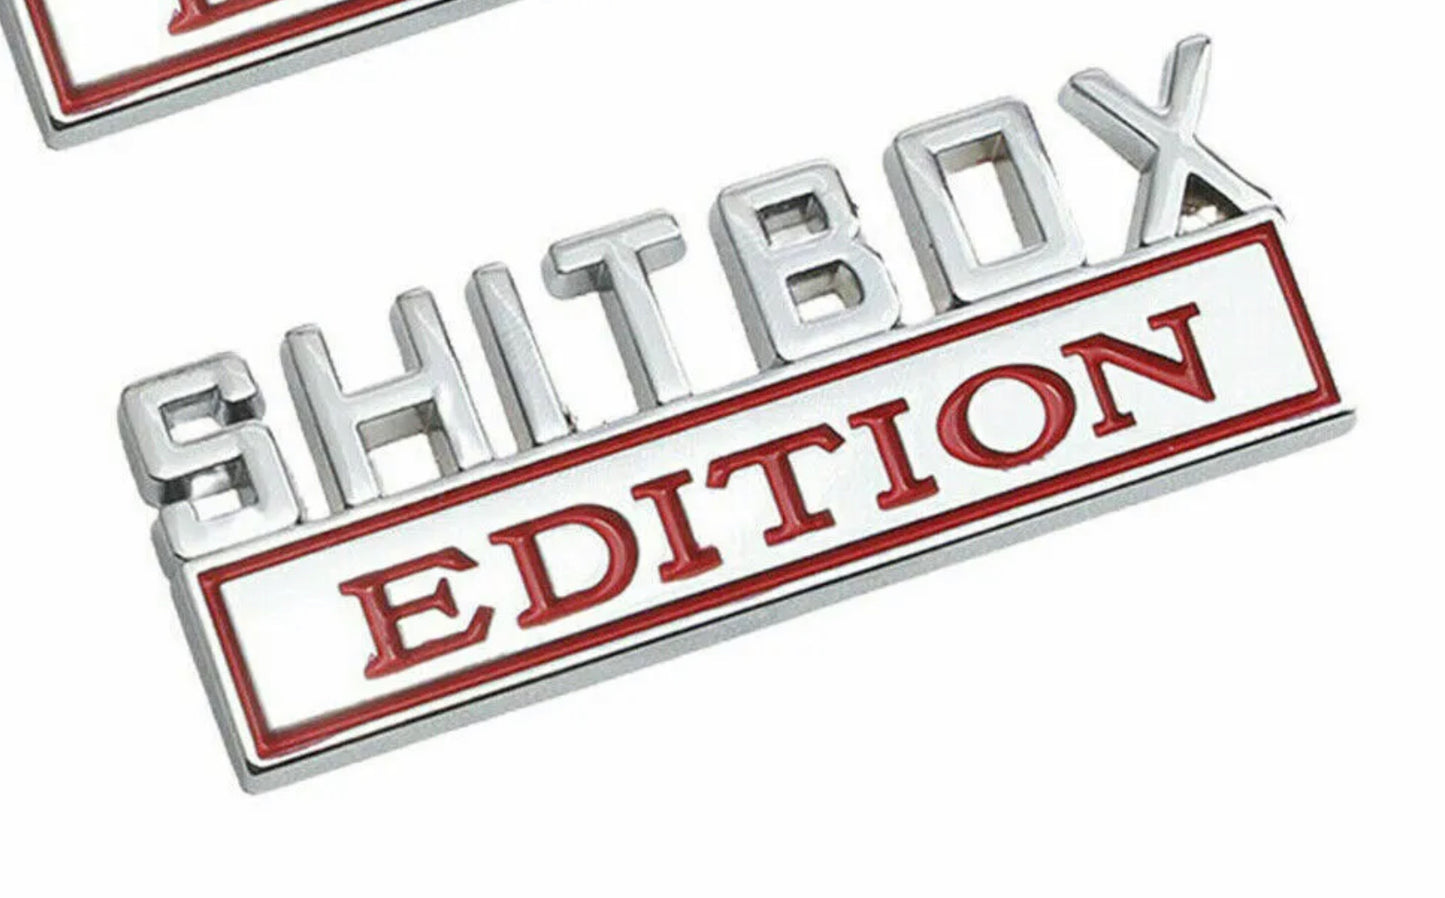 SHITBOX EDITION - 1x3 Metal Emblem USA MADE